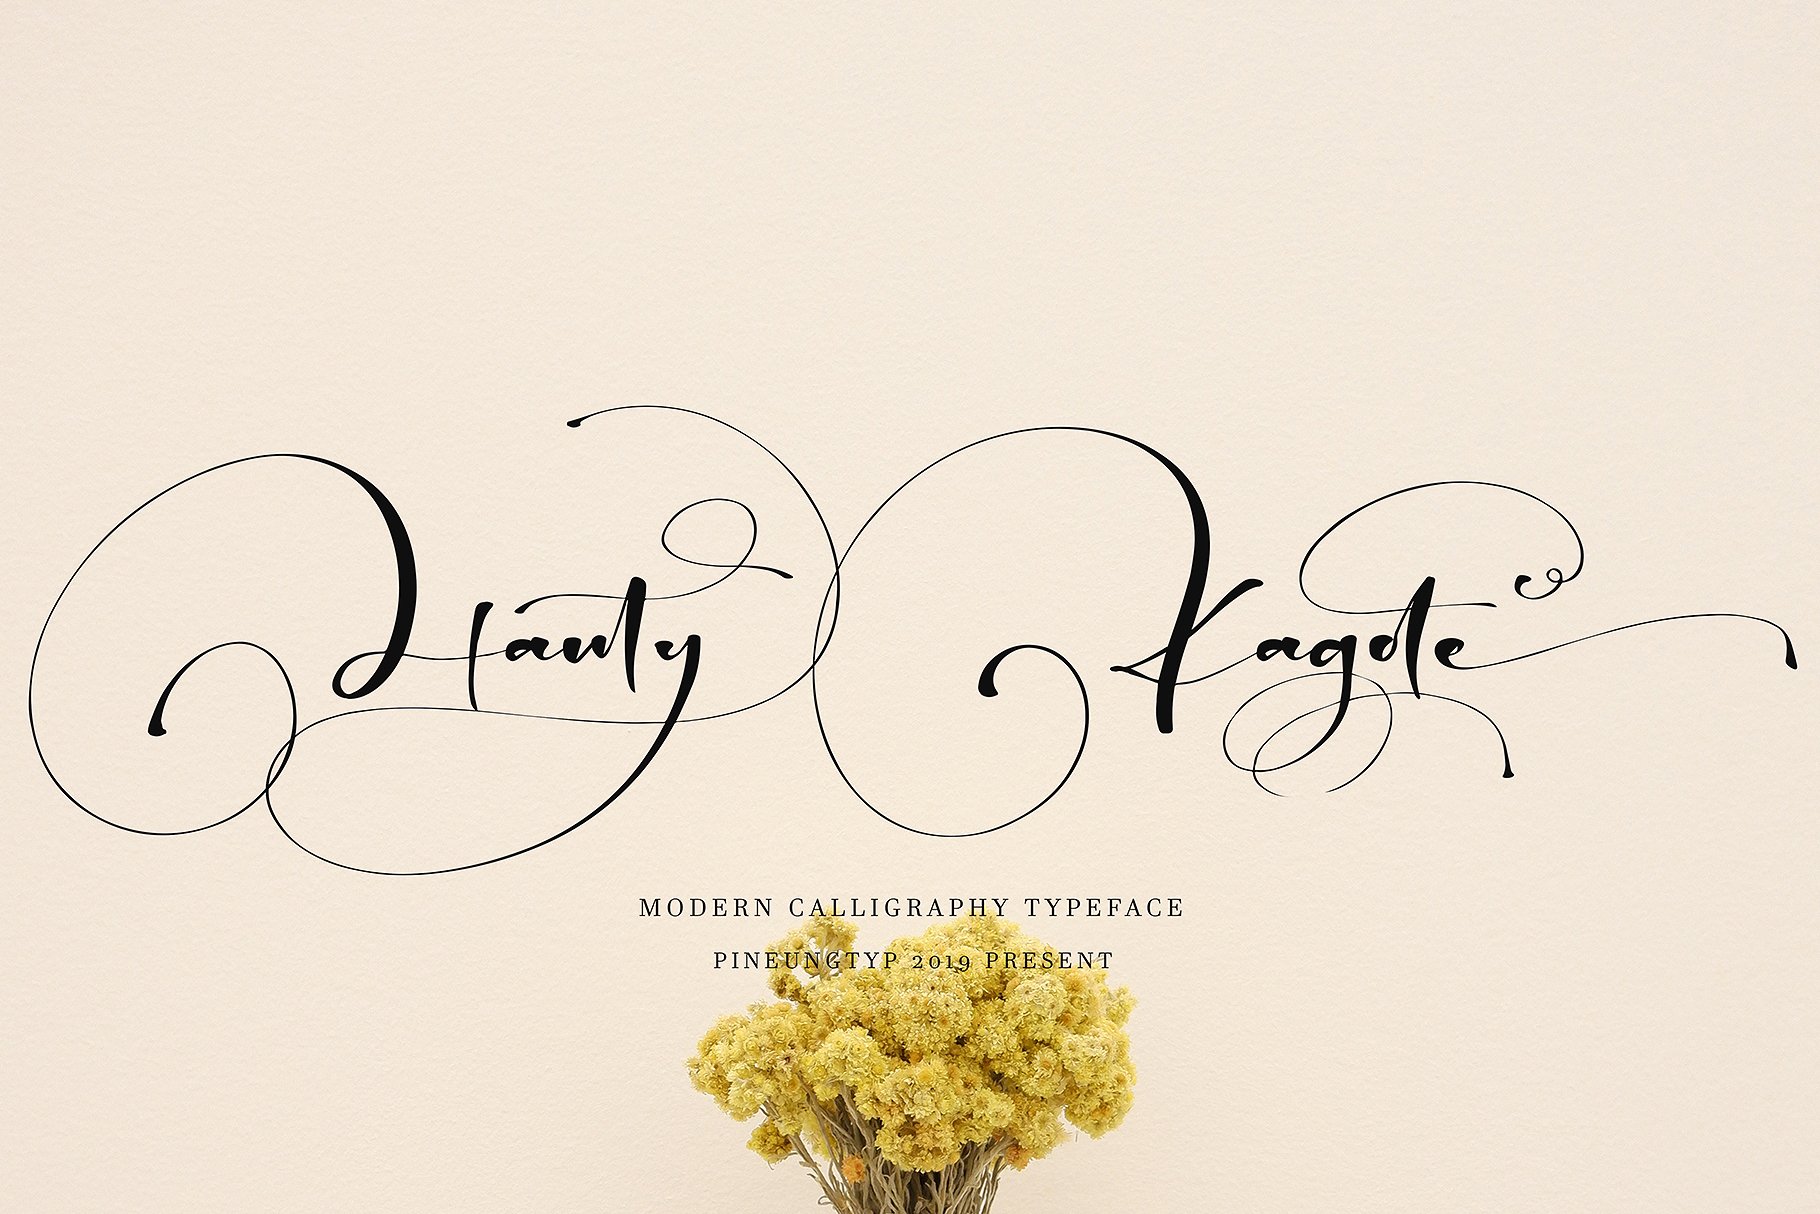 Hanty Kagote飘逸现代手写书法婚礼字体 Hanty Kagote Elegant Modern Handwritten Calligraphy Wedding Font插图